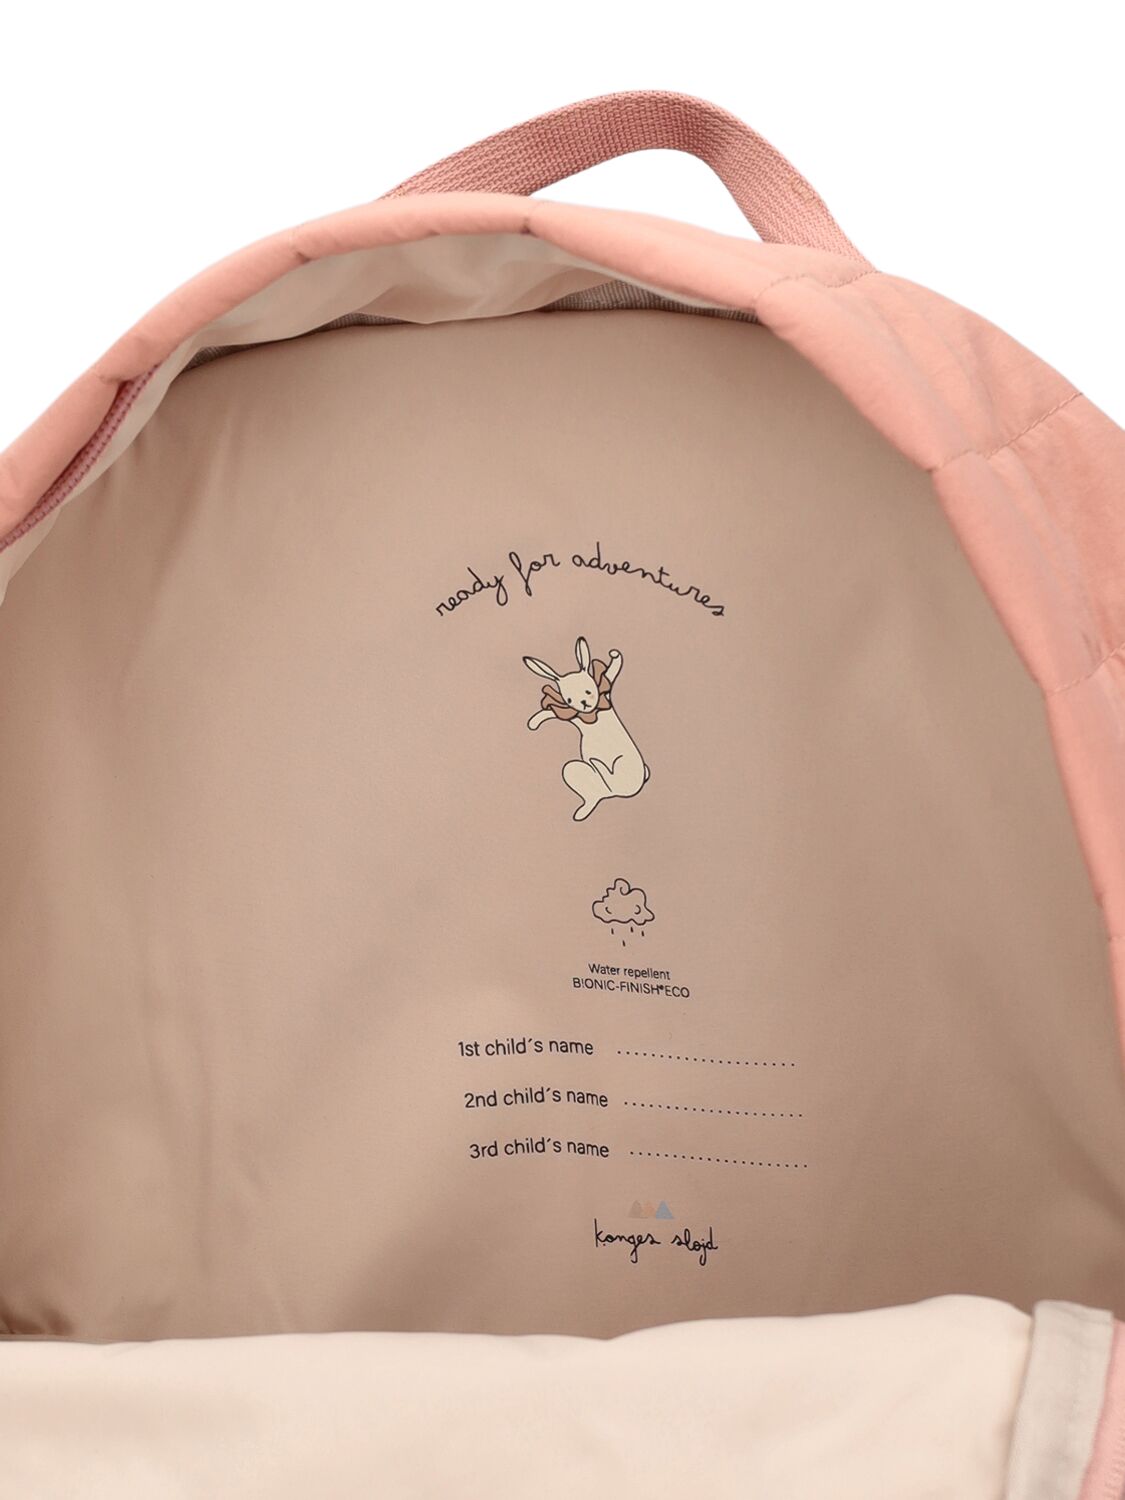 Shop Konges Sløjd Cherries Me Embroidered Nylon Backpack In Dark Pink